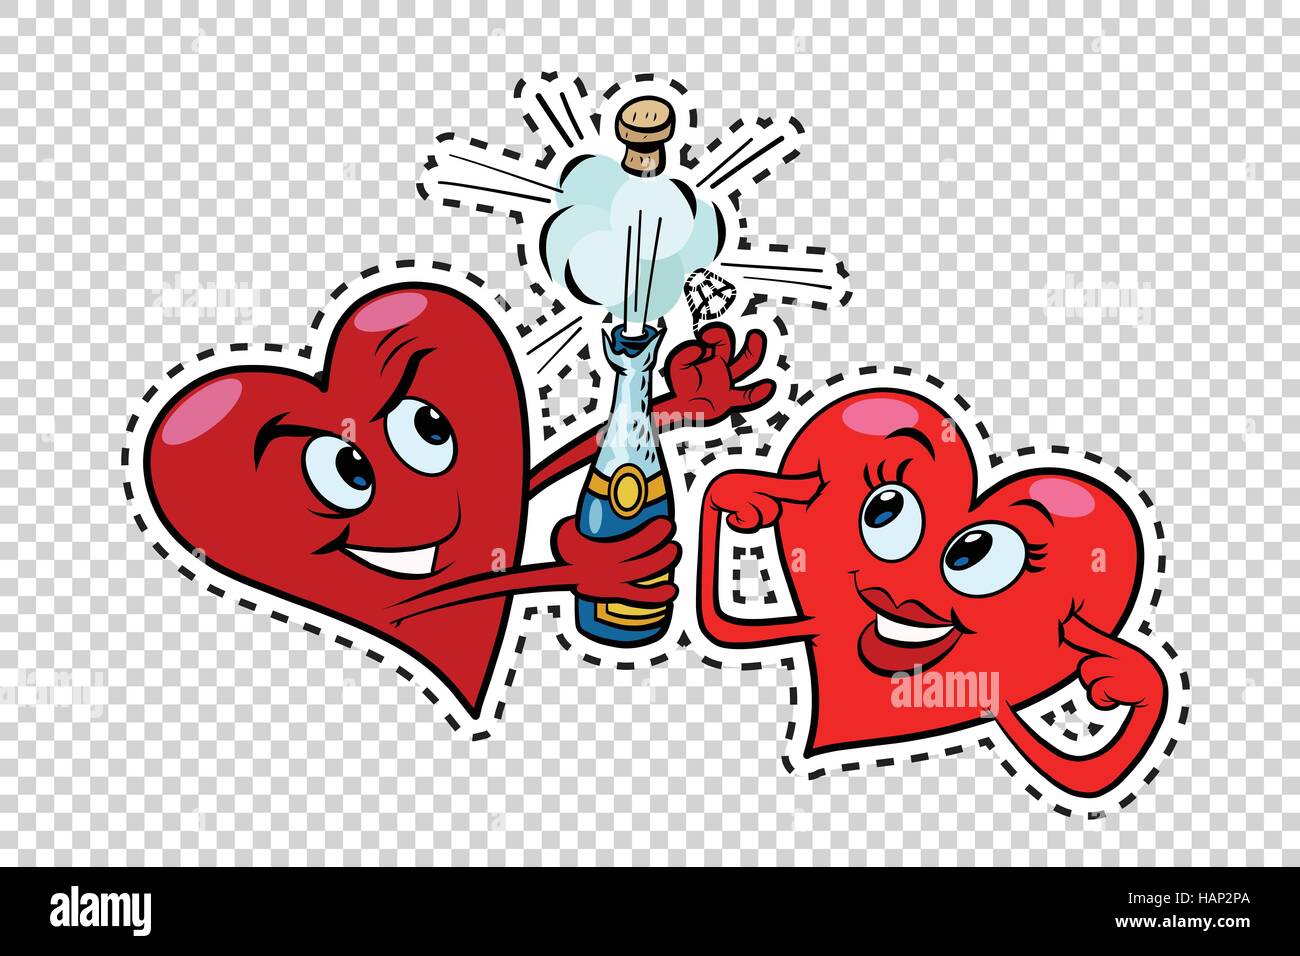 Valentines Red Heart sabler le champagne Illustration de Vecteur